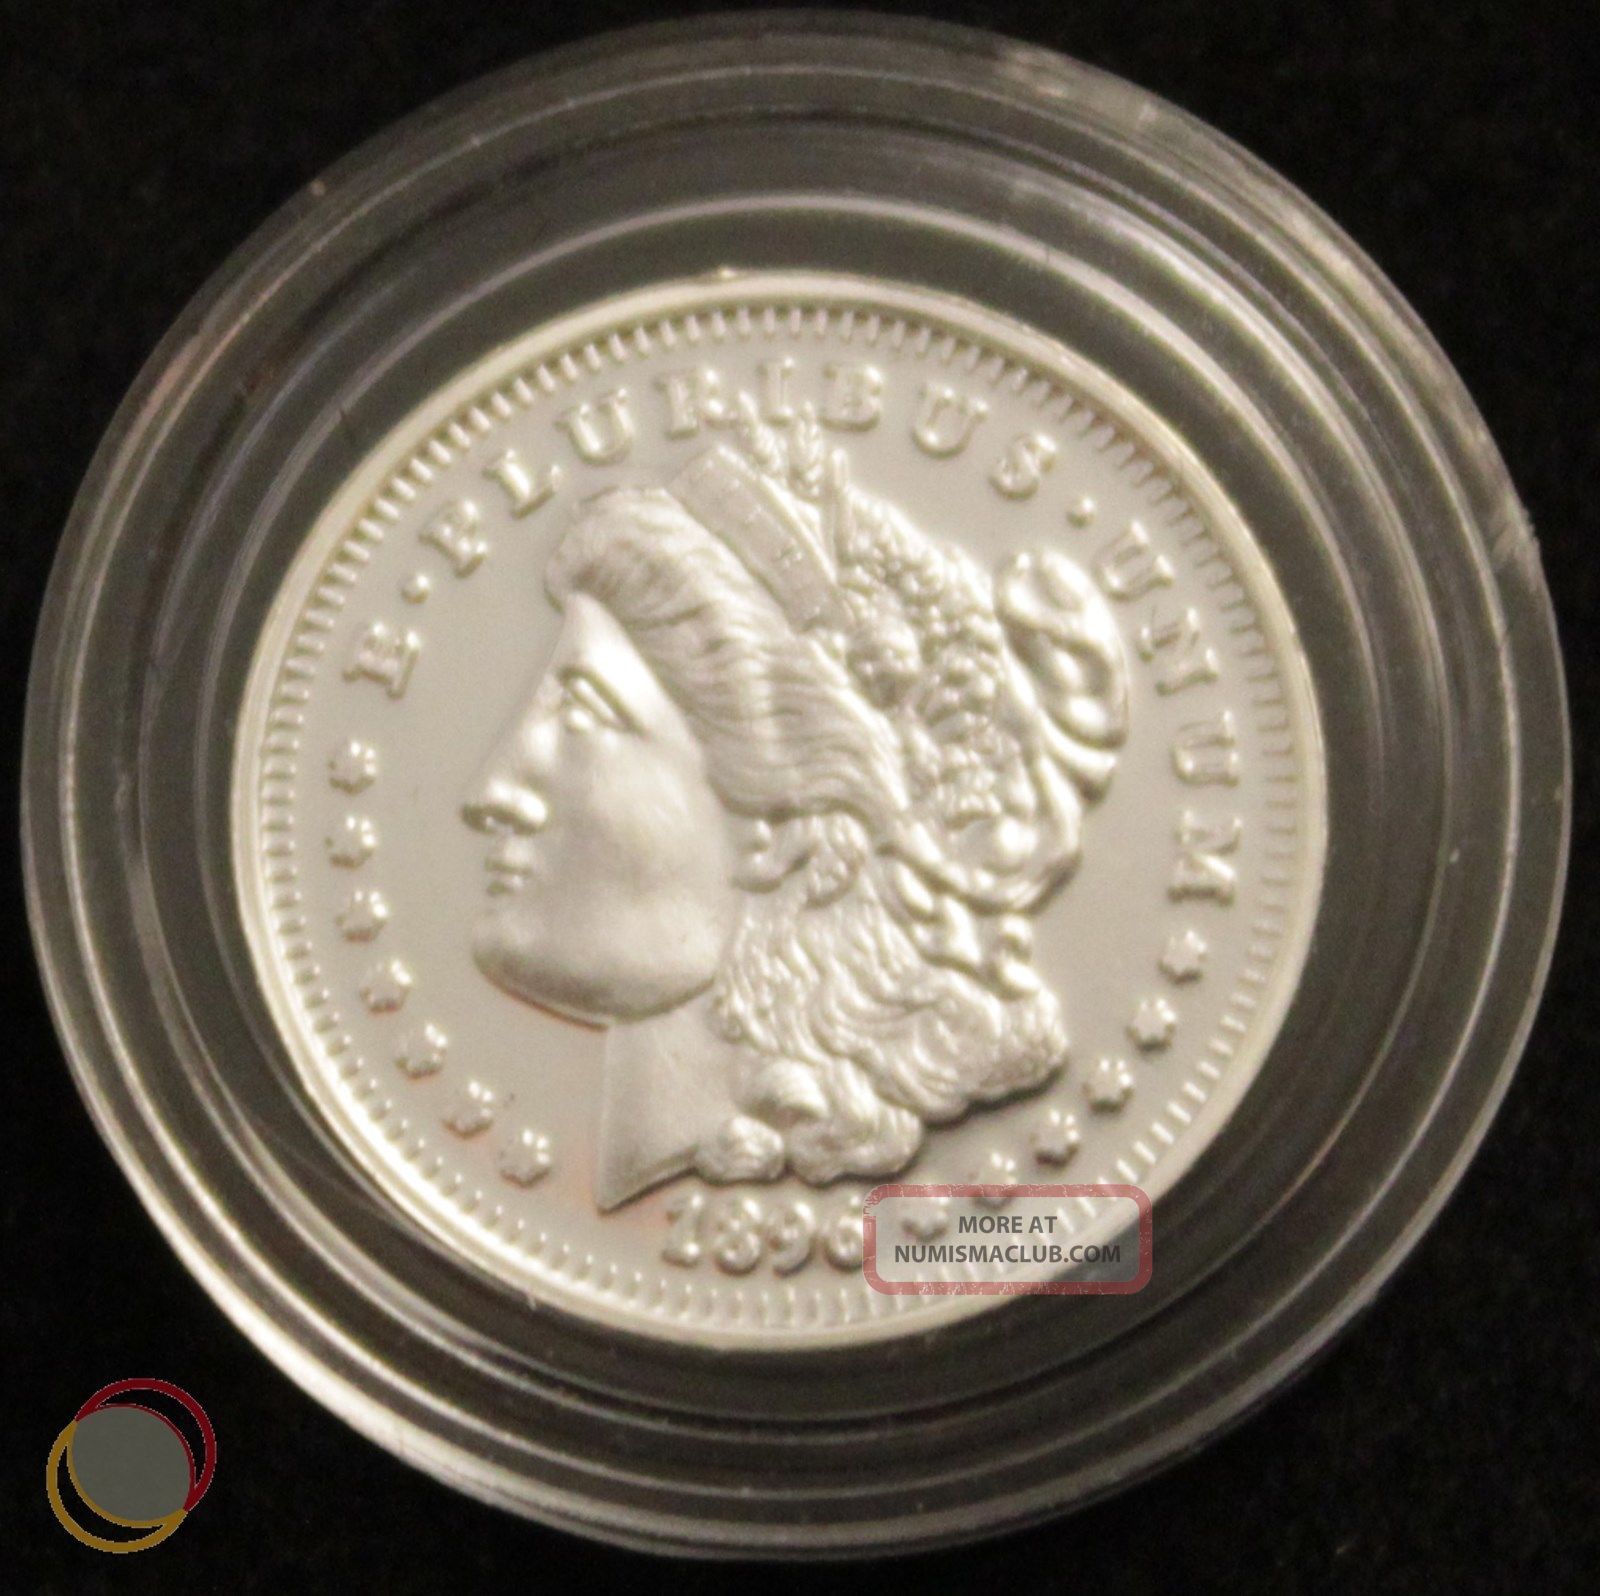 1 Gram " Dollar " 999 Solid Pure Silver Coin Bullion Tribute